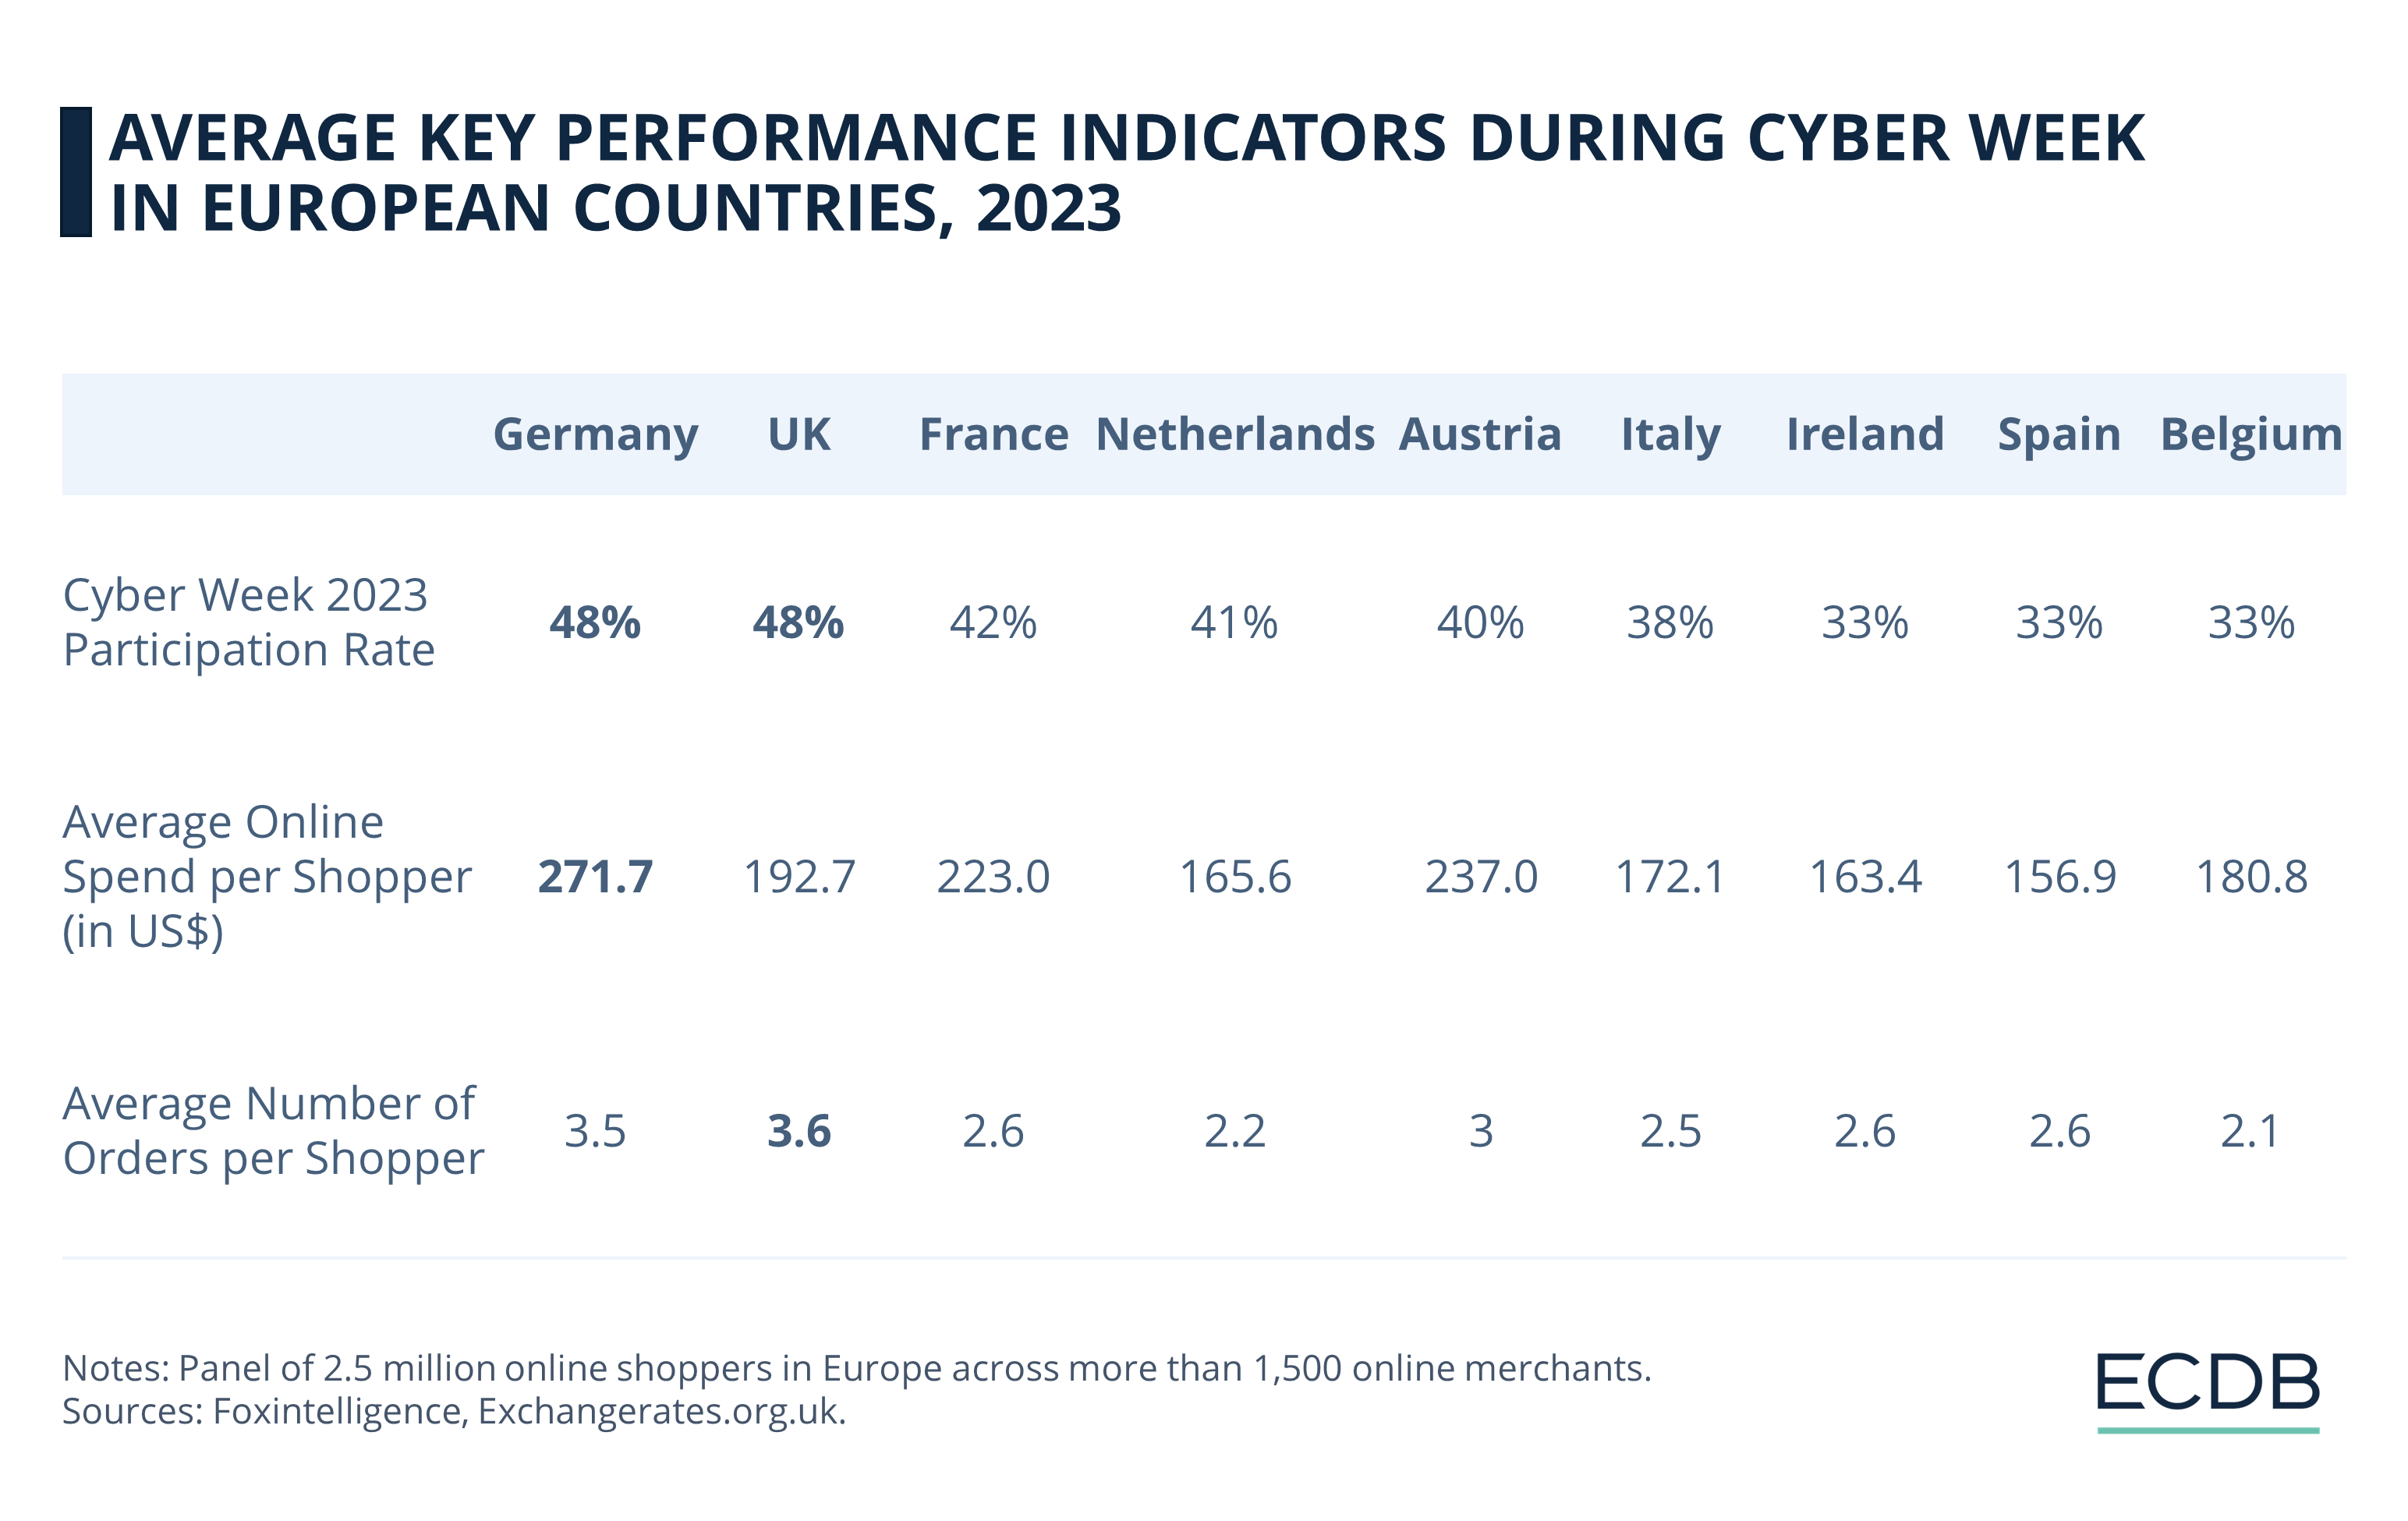 Average Key Performance Indicators During Cyber Week in European Countries, 2023